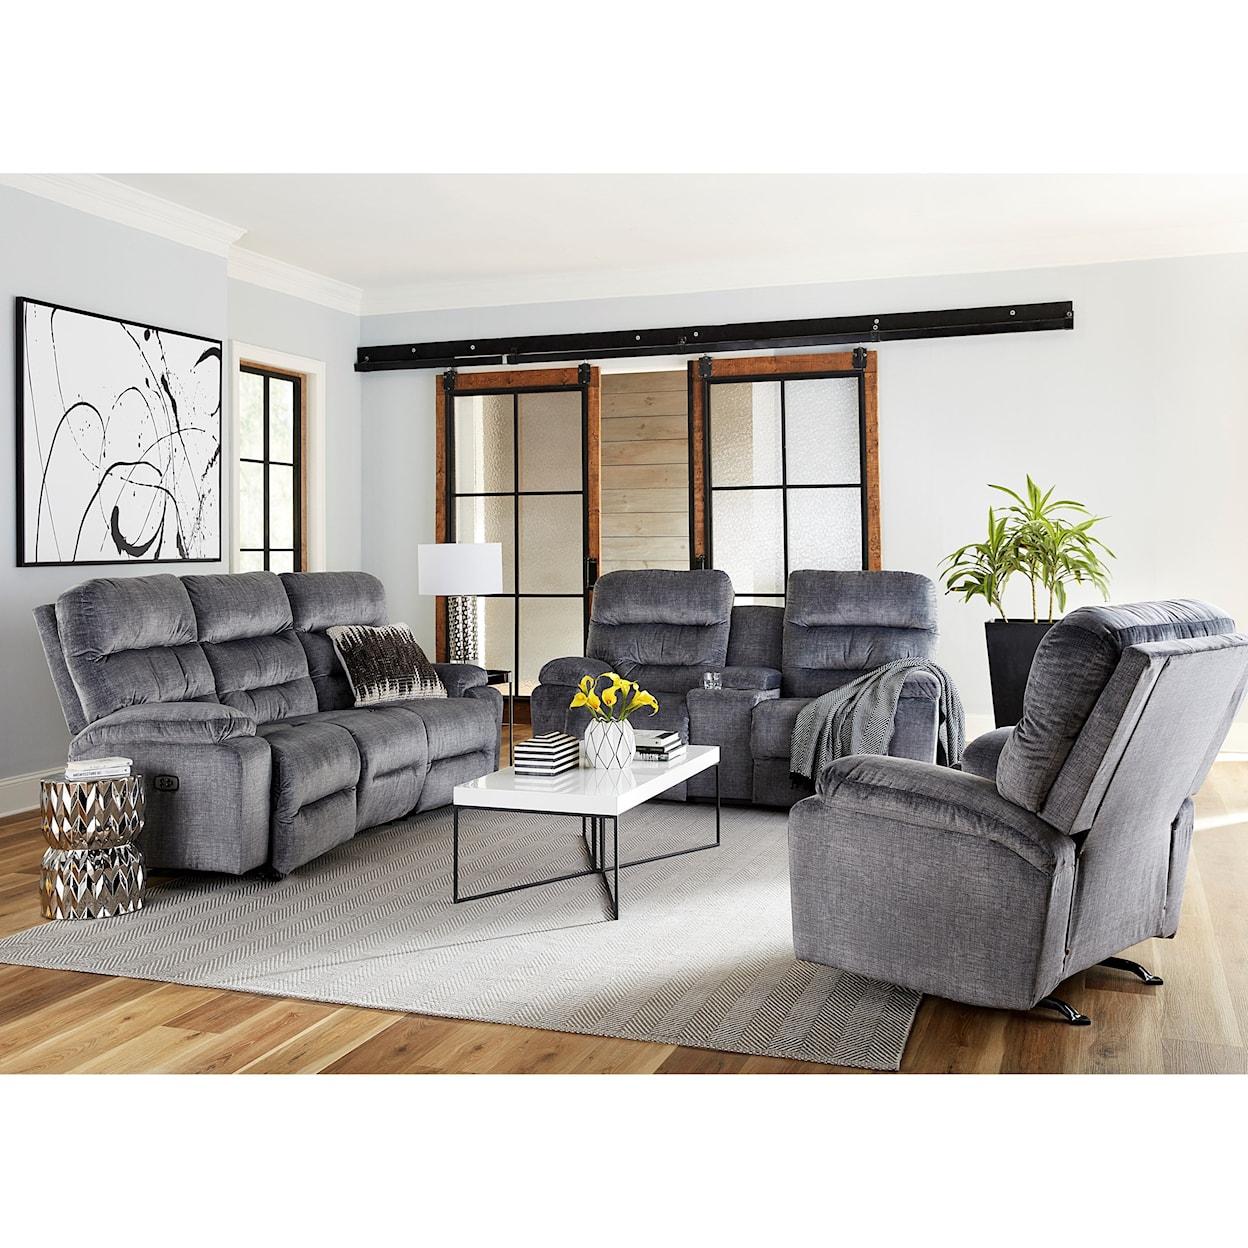 Bravo Furniture Ryson Conversation Space Saver Reclining Sofa